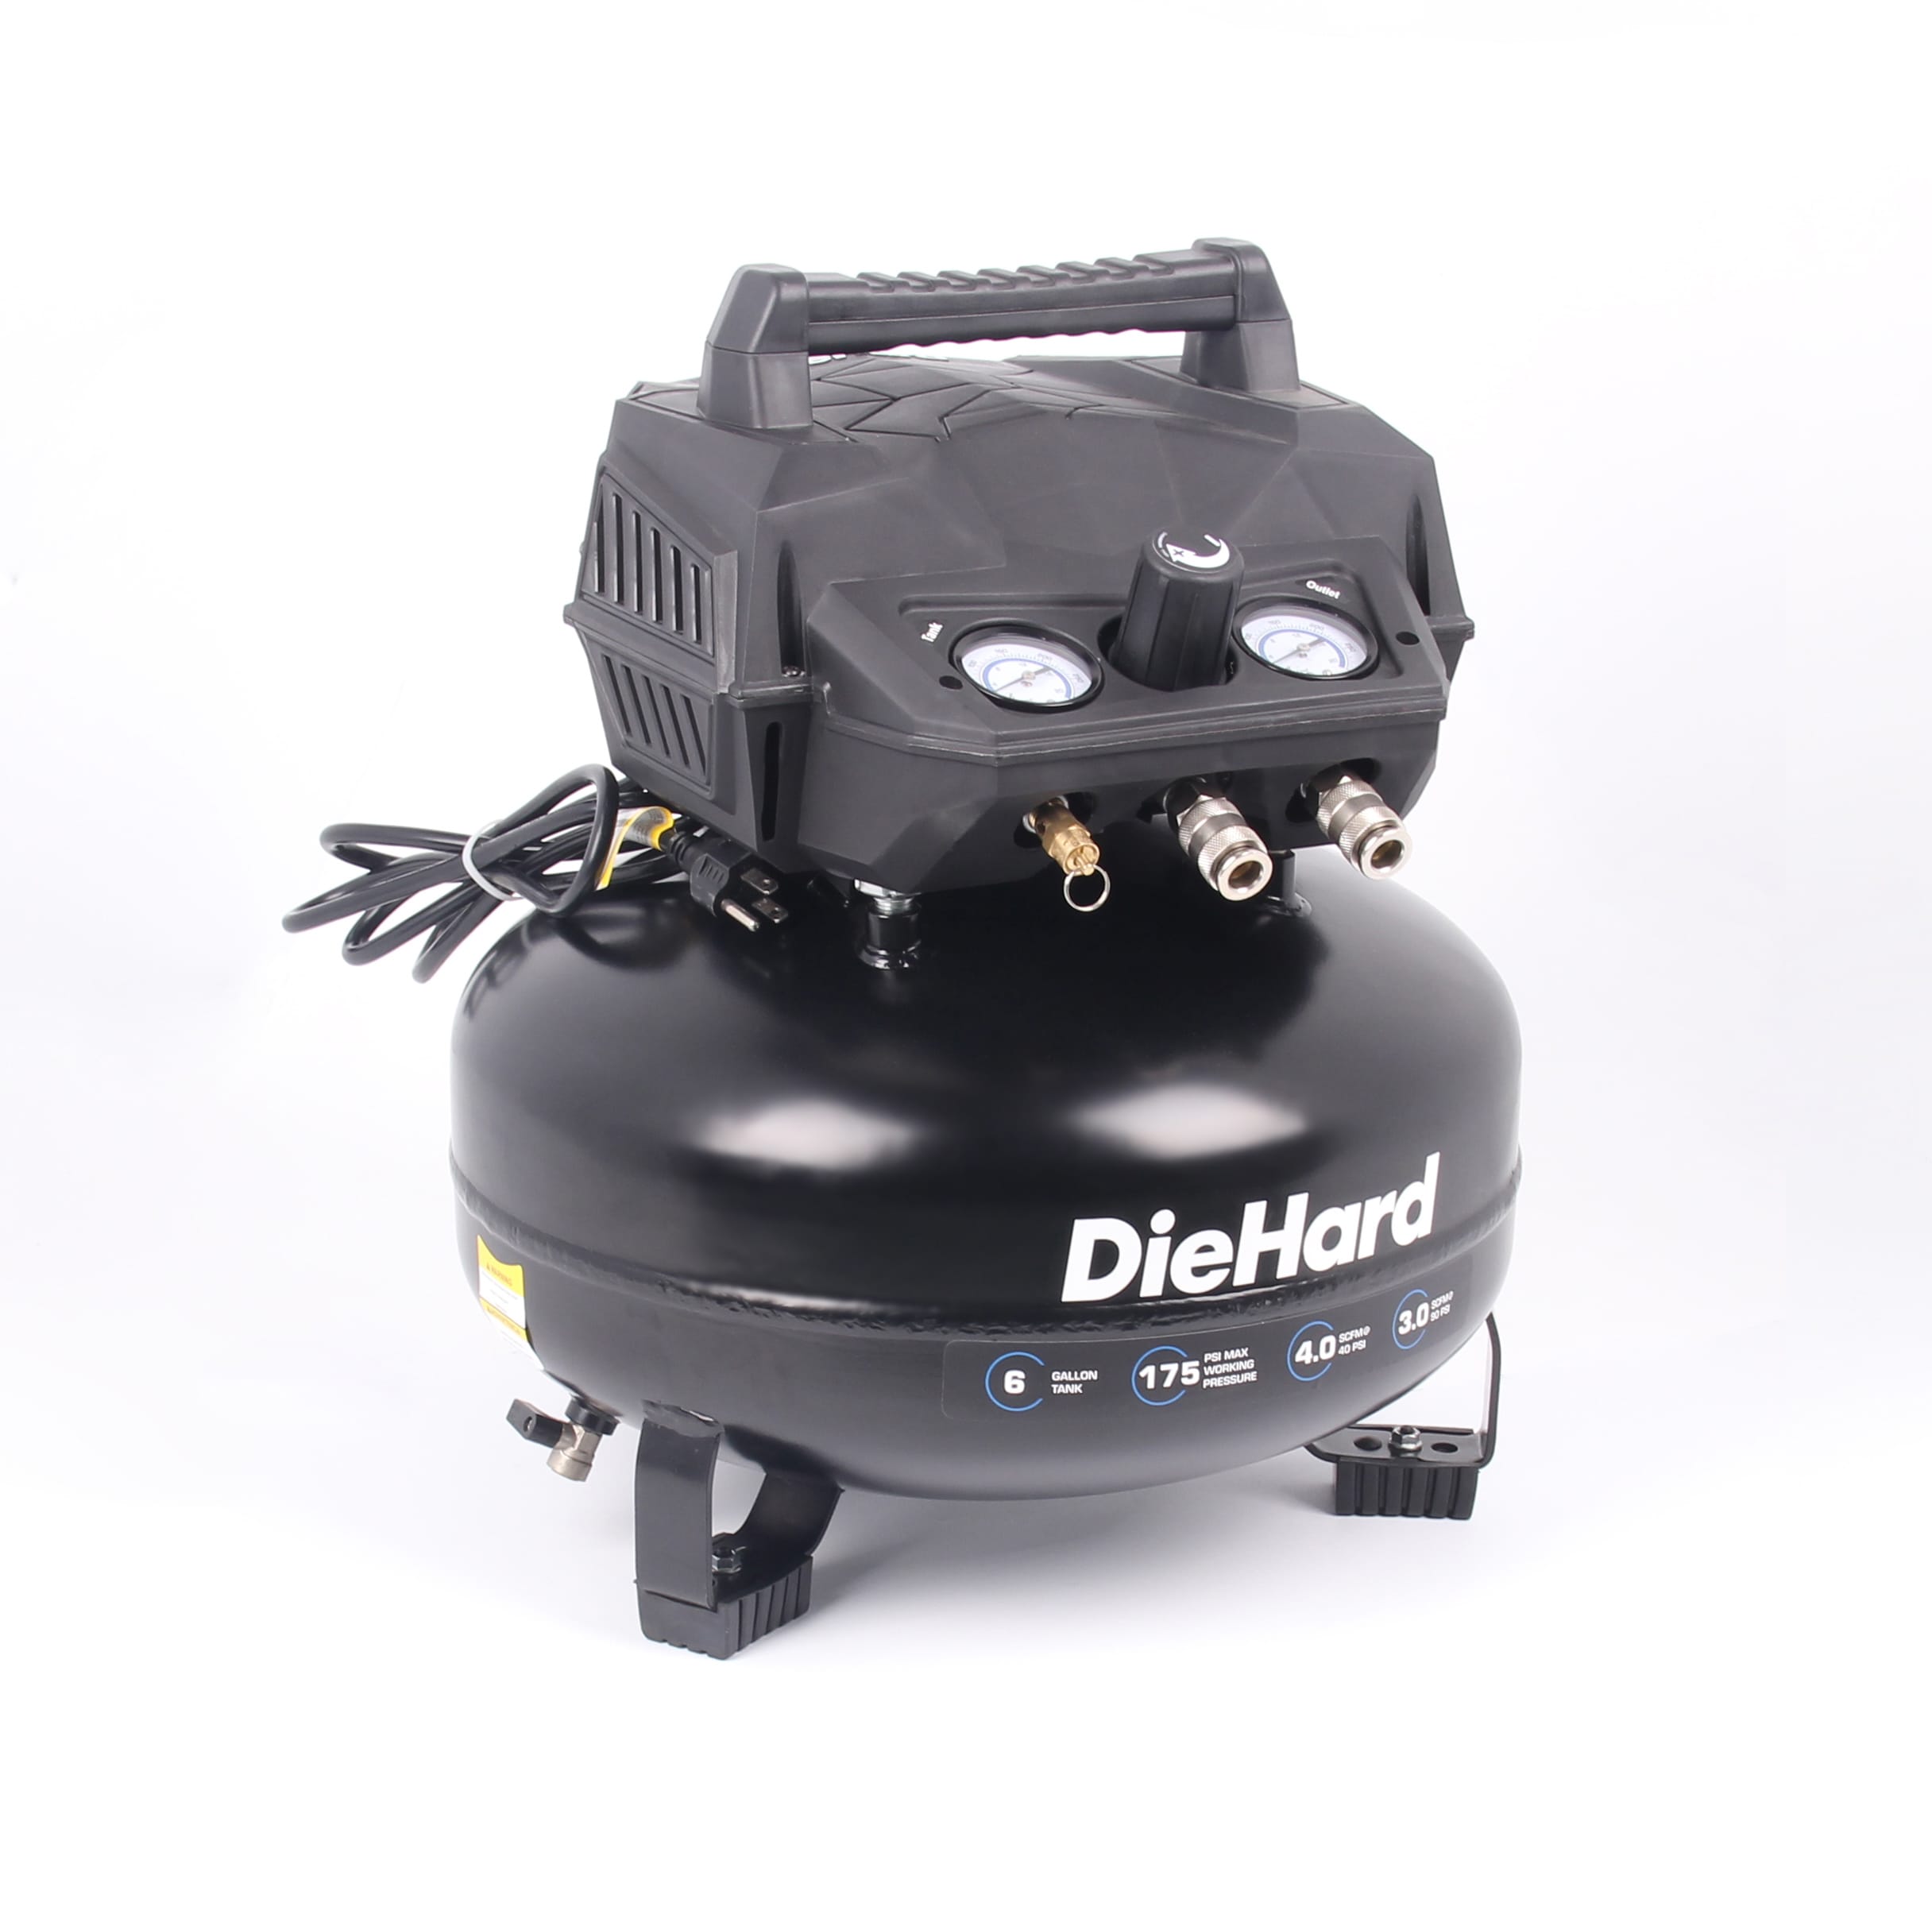 DieHard 6-Gallons Portable 175 Psi Pancake Air Compressor in the